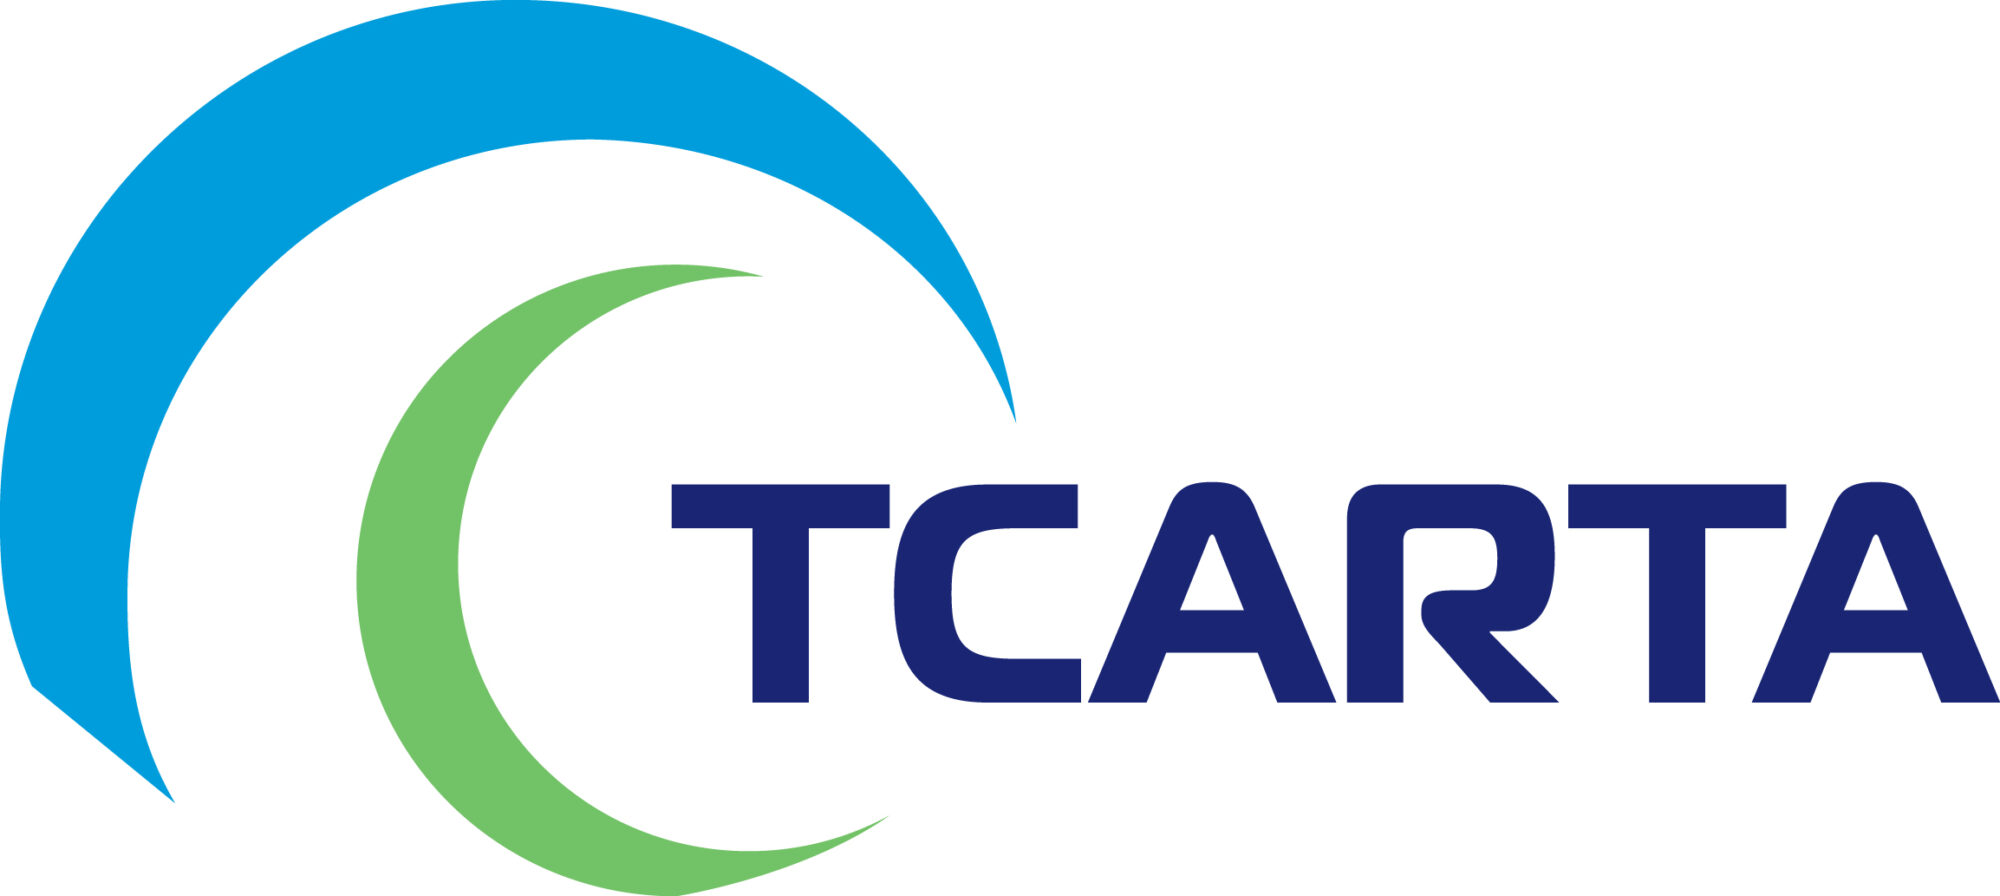 TCARTA  Logo 2000x896